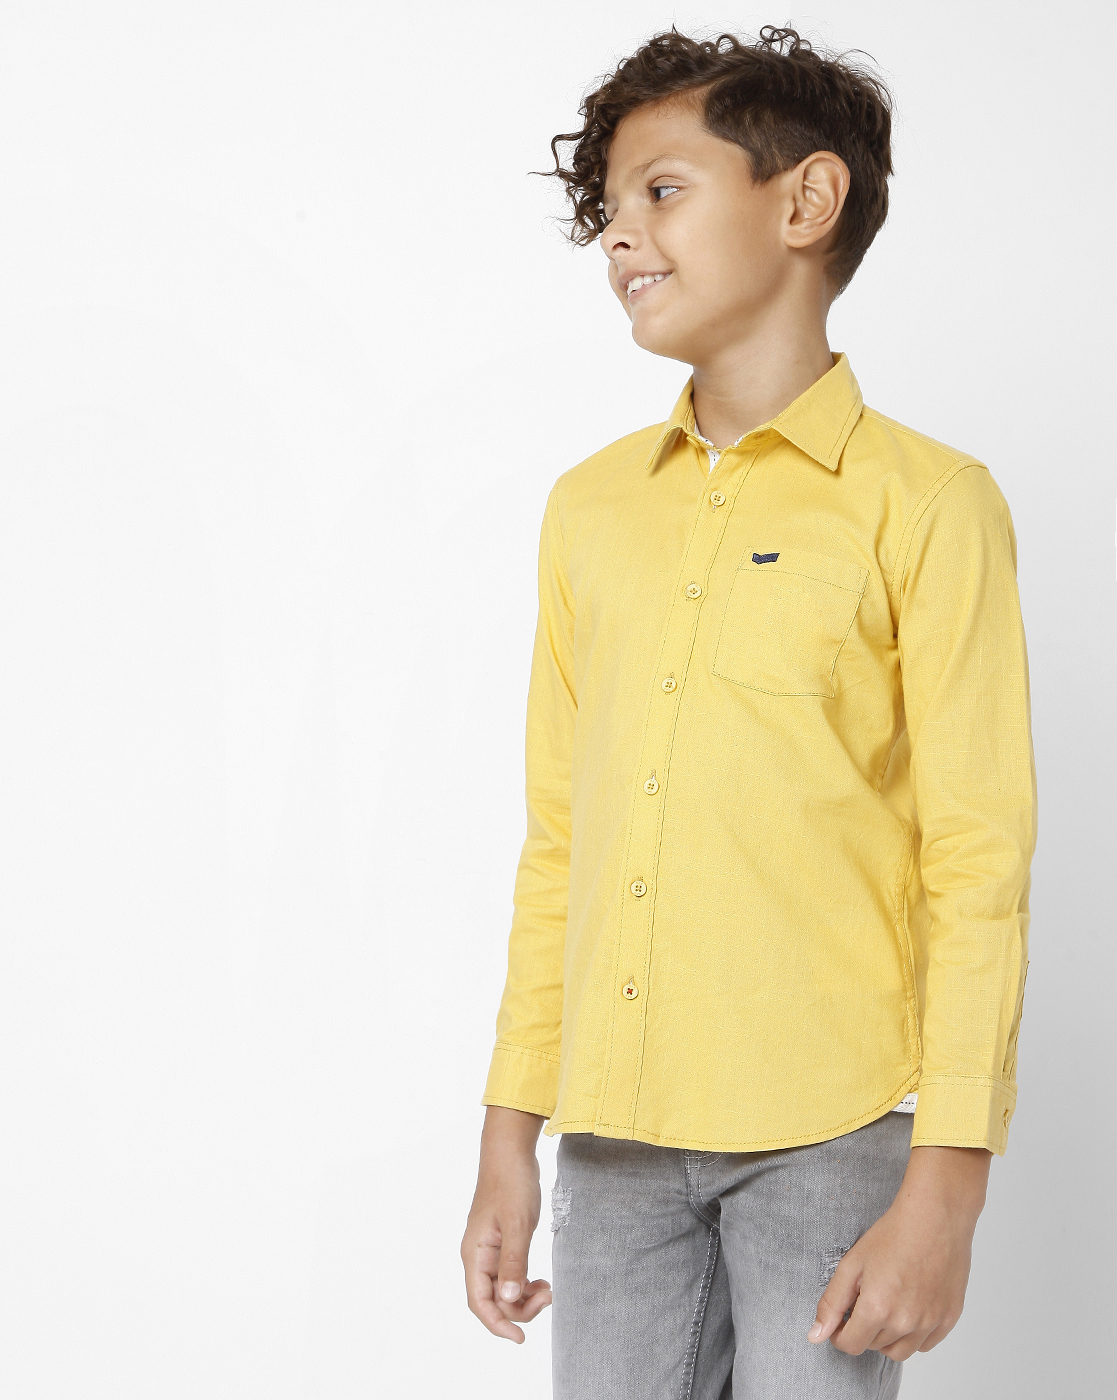 GAS KIDS Boys  Solid Yellow Shirt